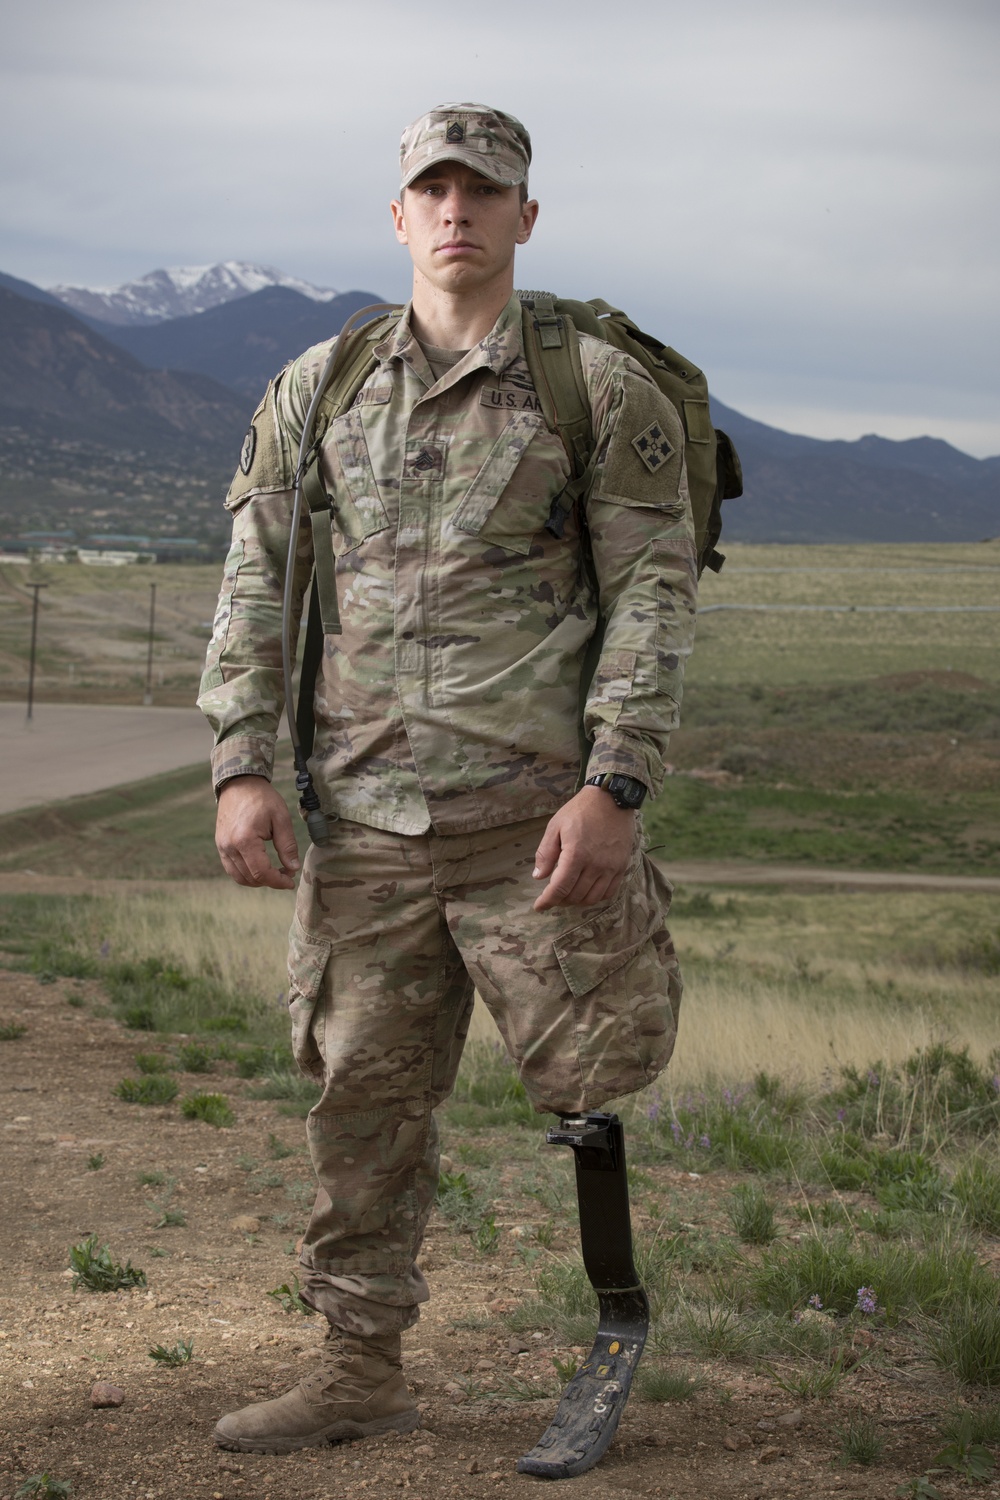 Staff Sgt. Joshua Budd: Active Duty Amputee, Combat Infantryman